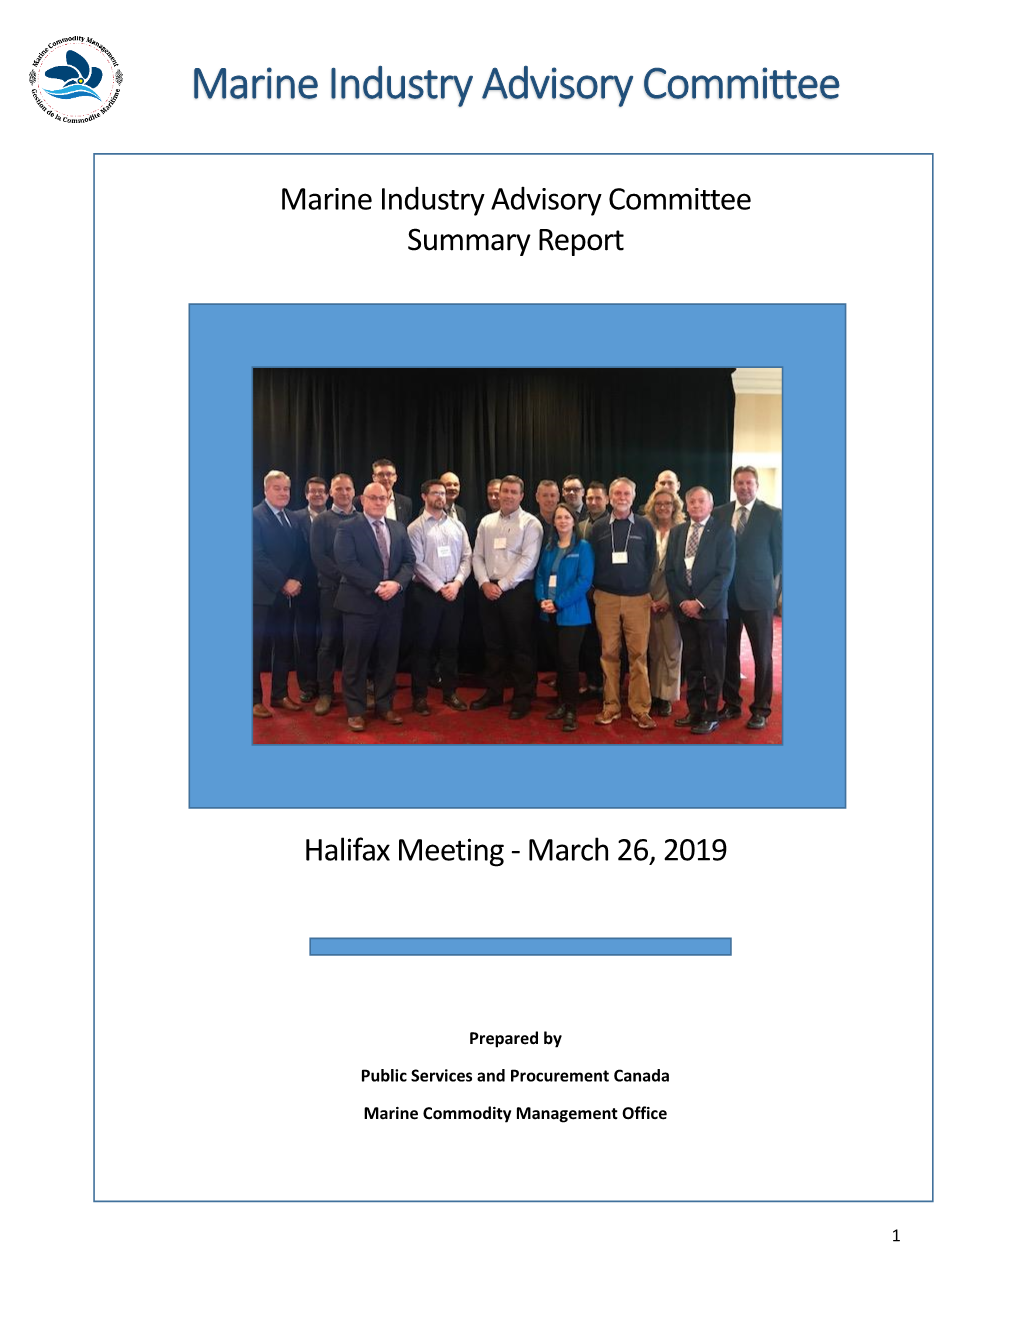 Marine Industry Advisory Committee Summary Report Halifax Meeting